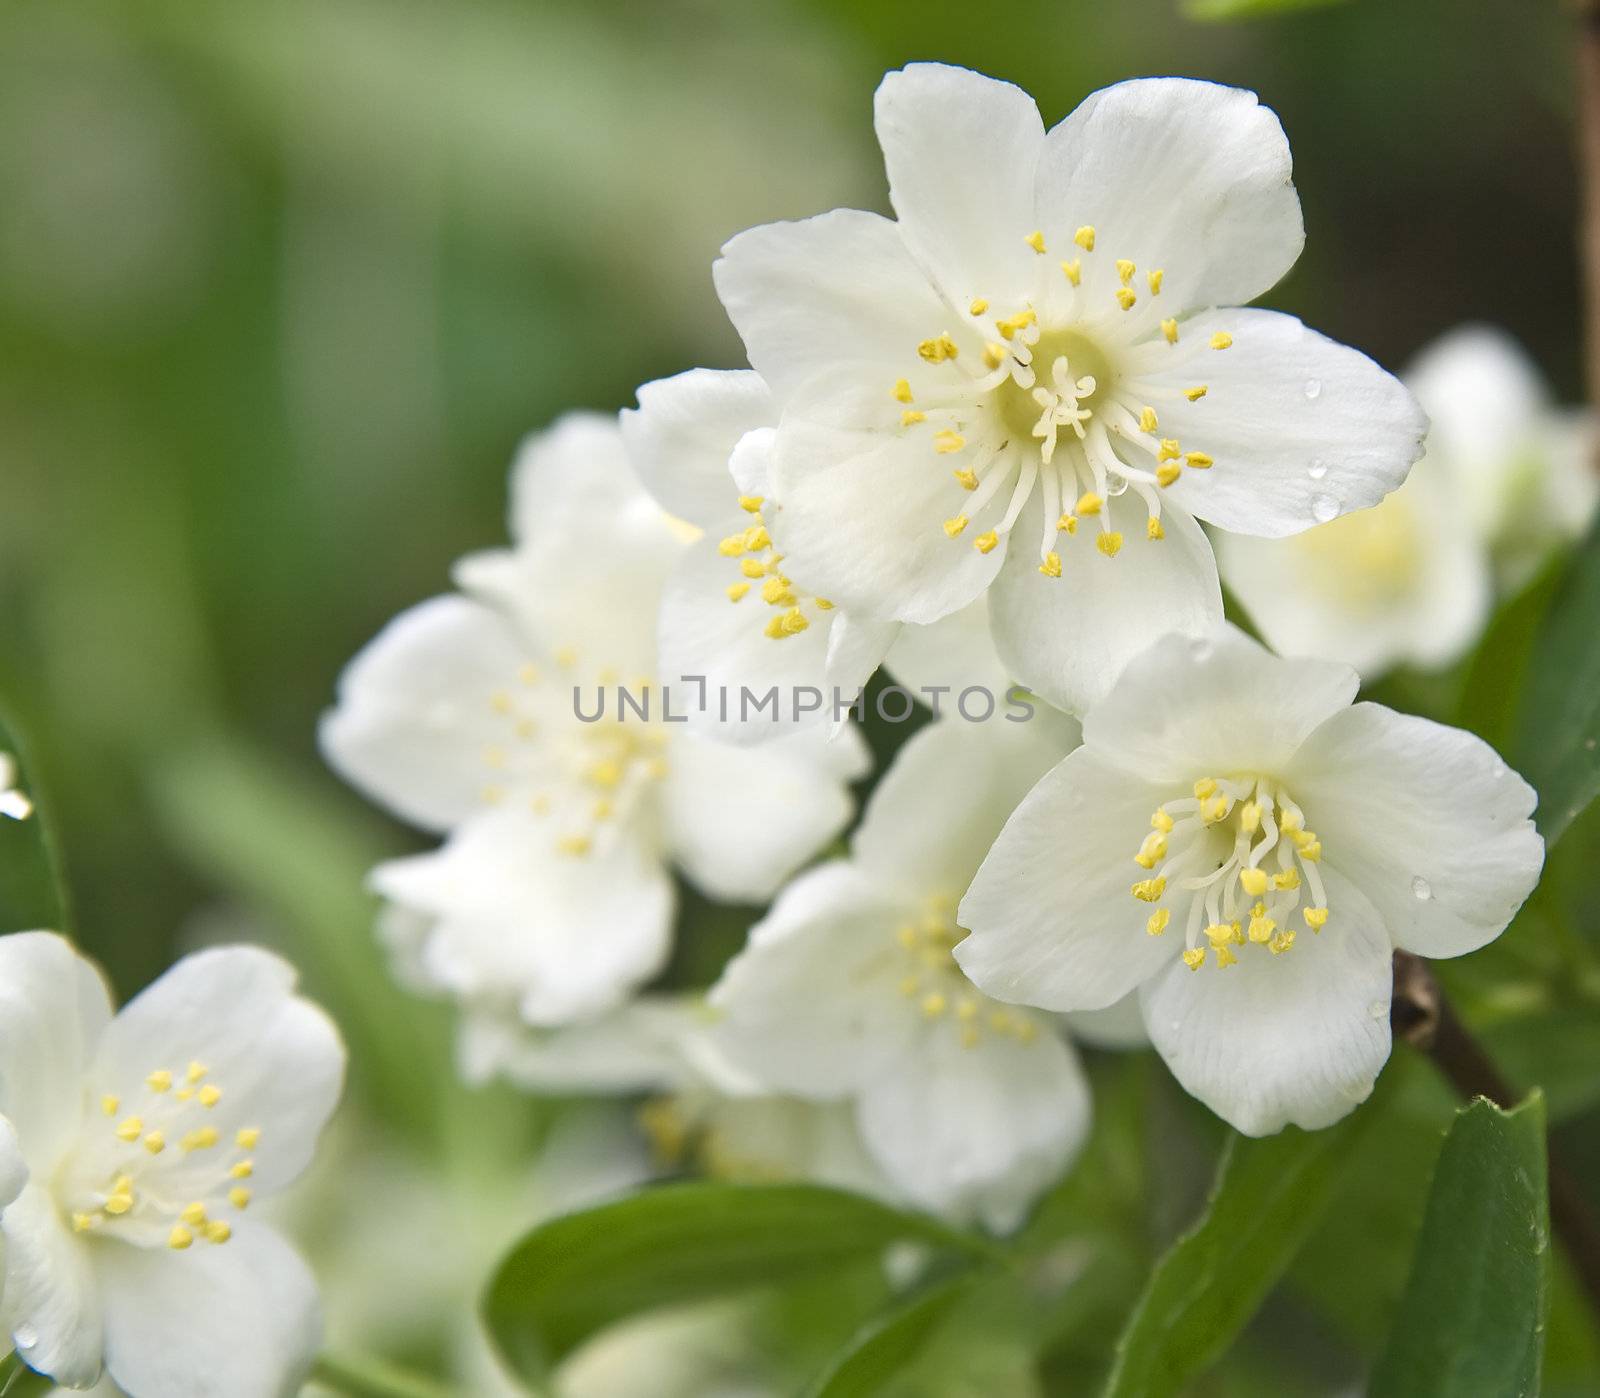 Macro shot of jasmine flower with dew drops. Selective focus. Shallow depth of field